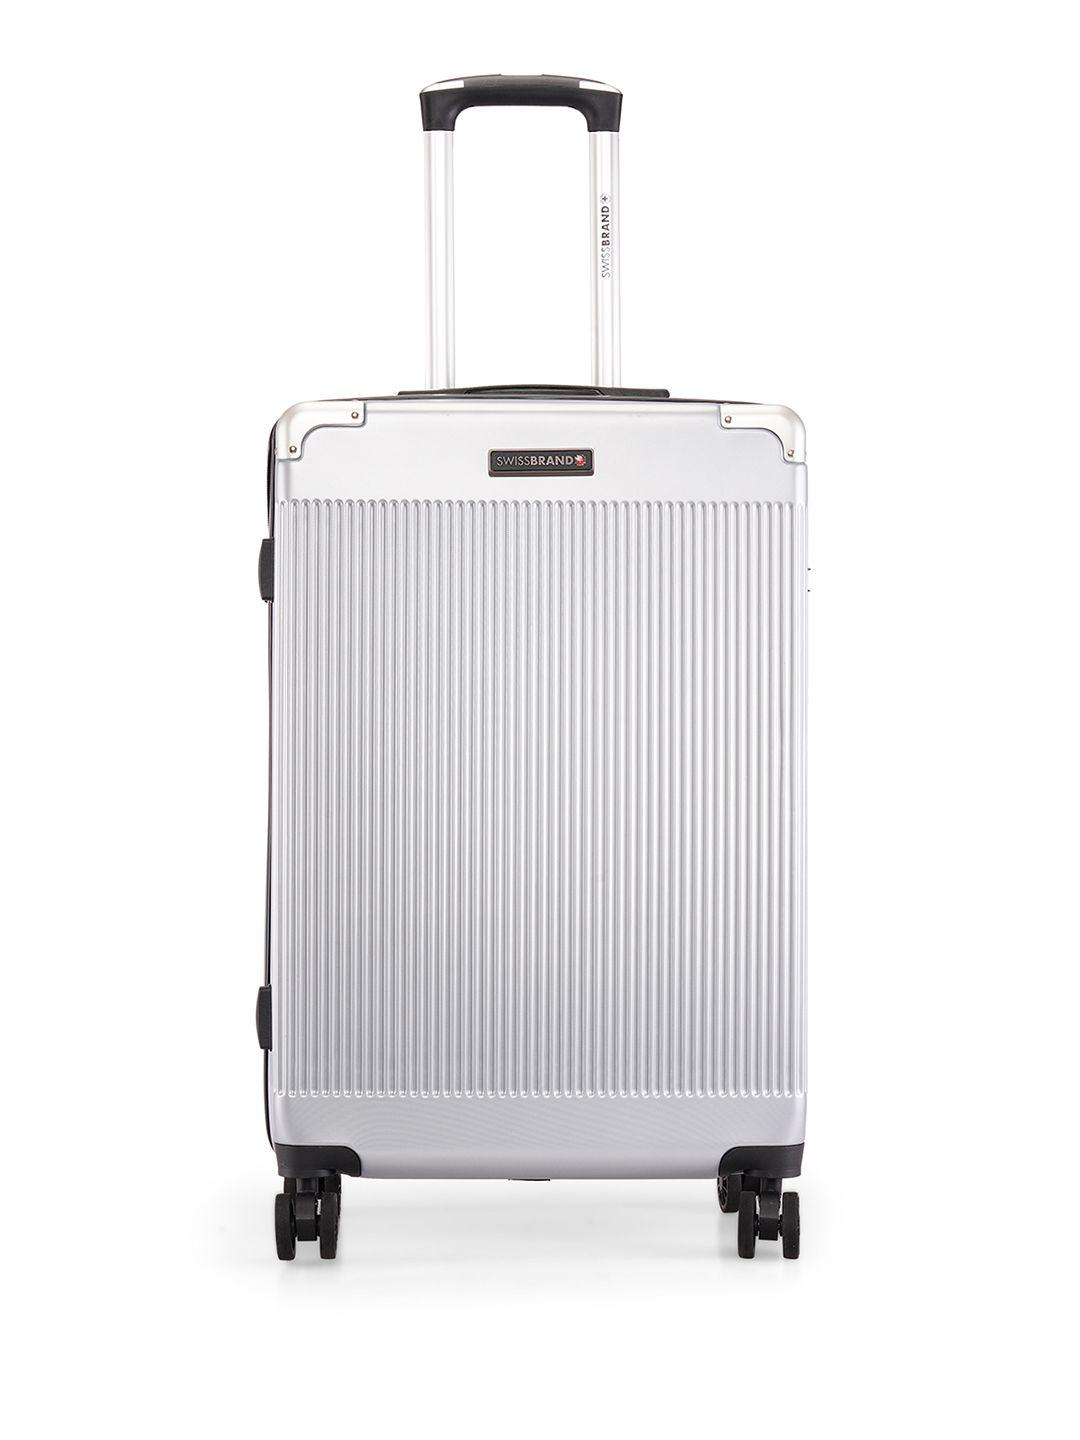 swiss brand unisex silver-toned textured geneve hard-sided medium trolley suitcase